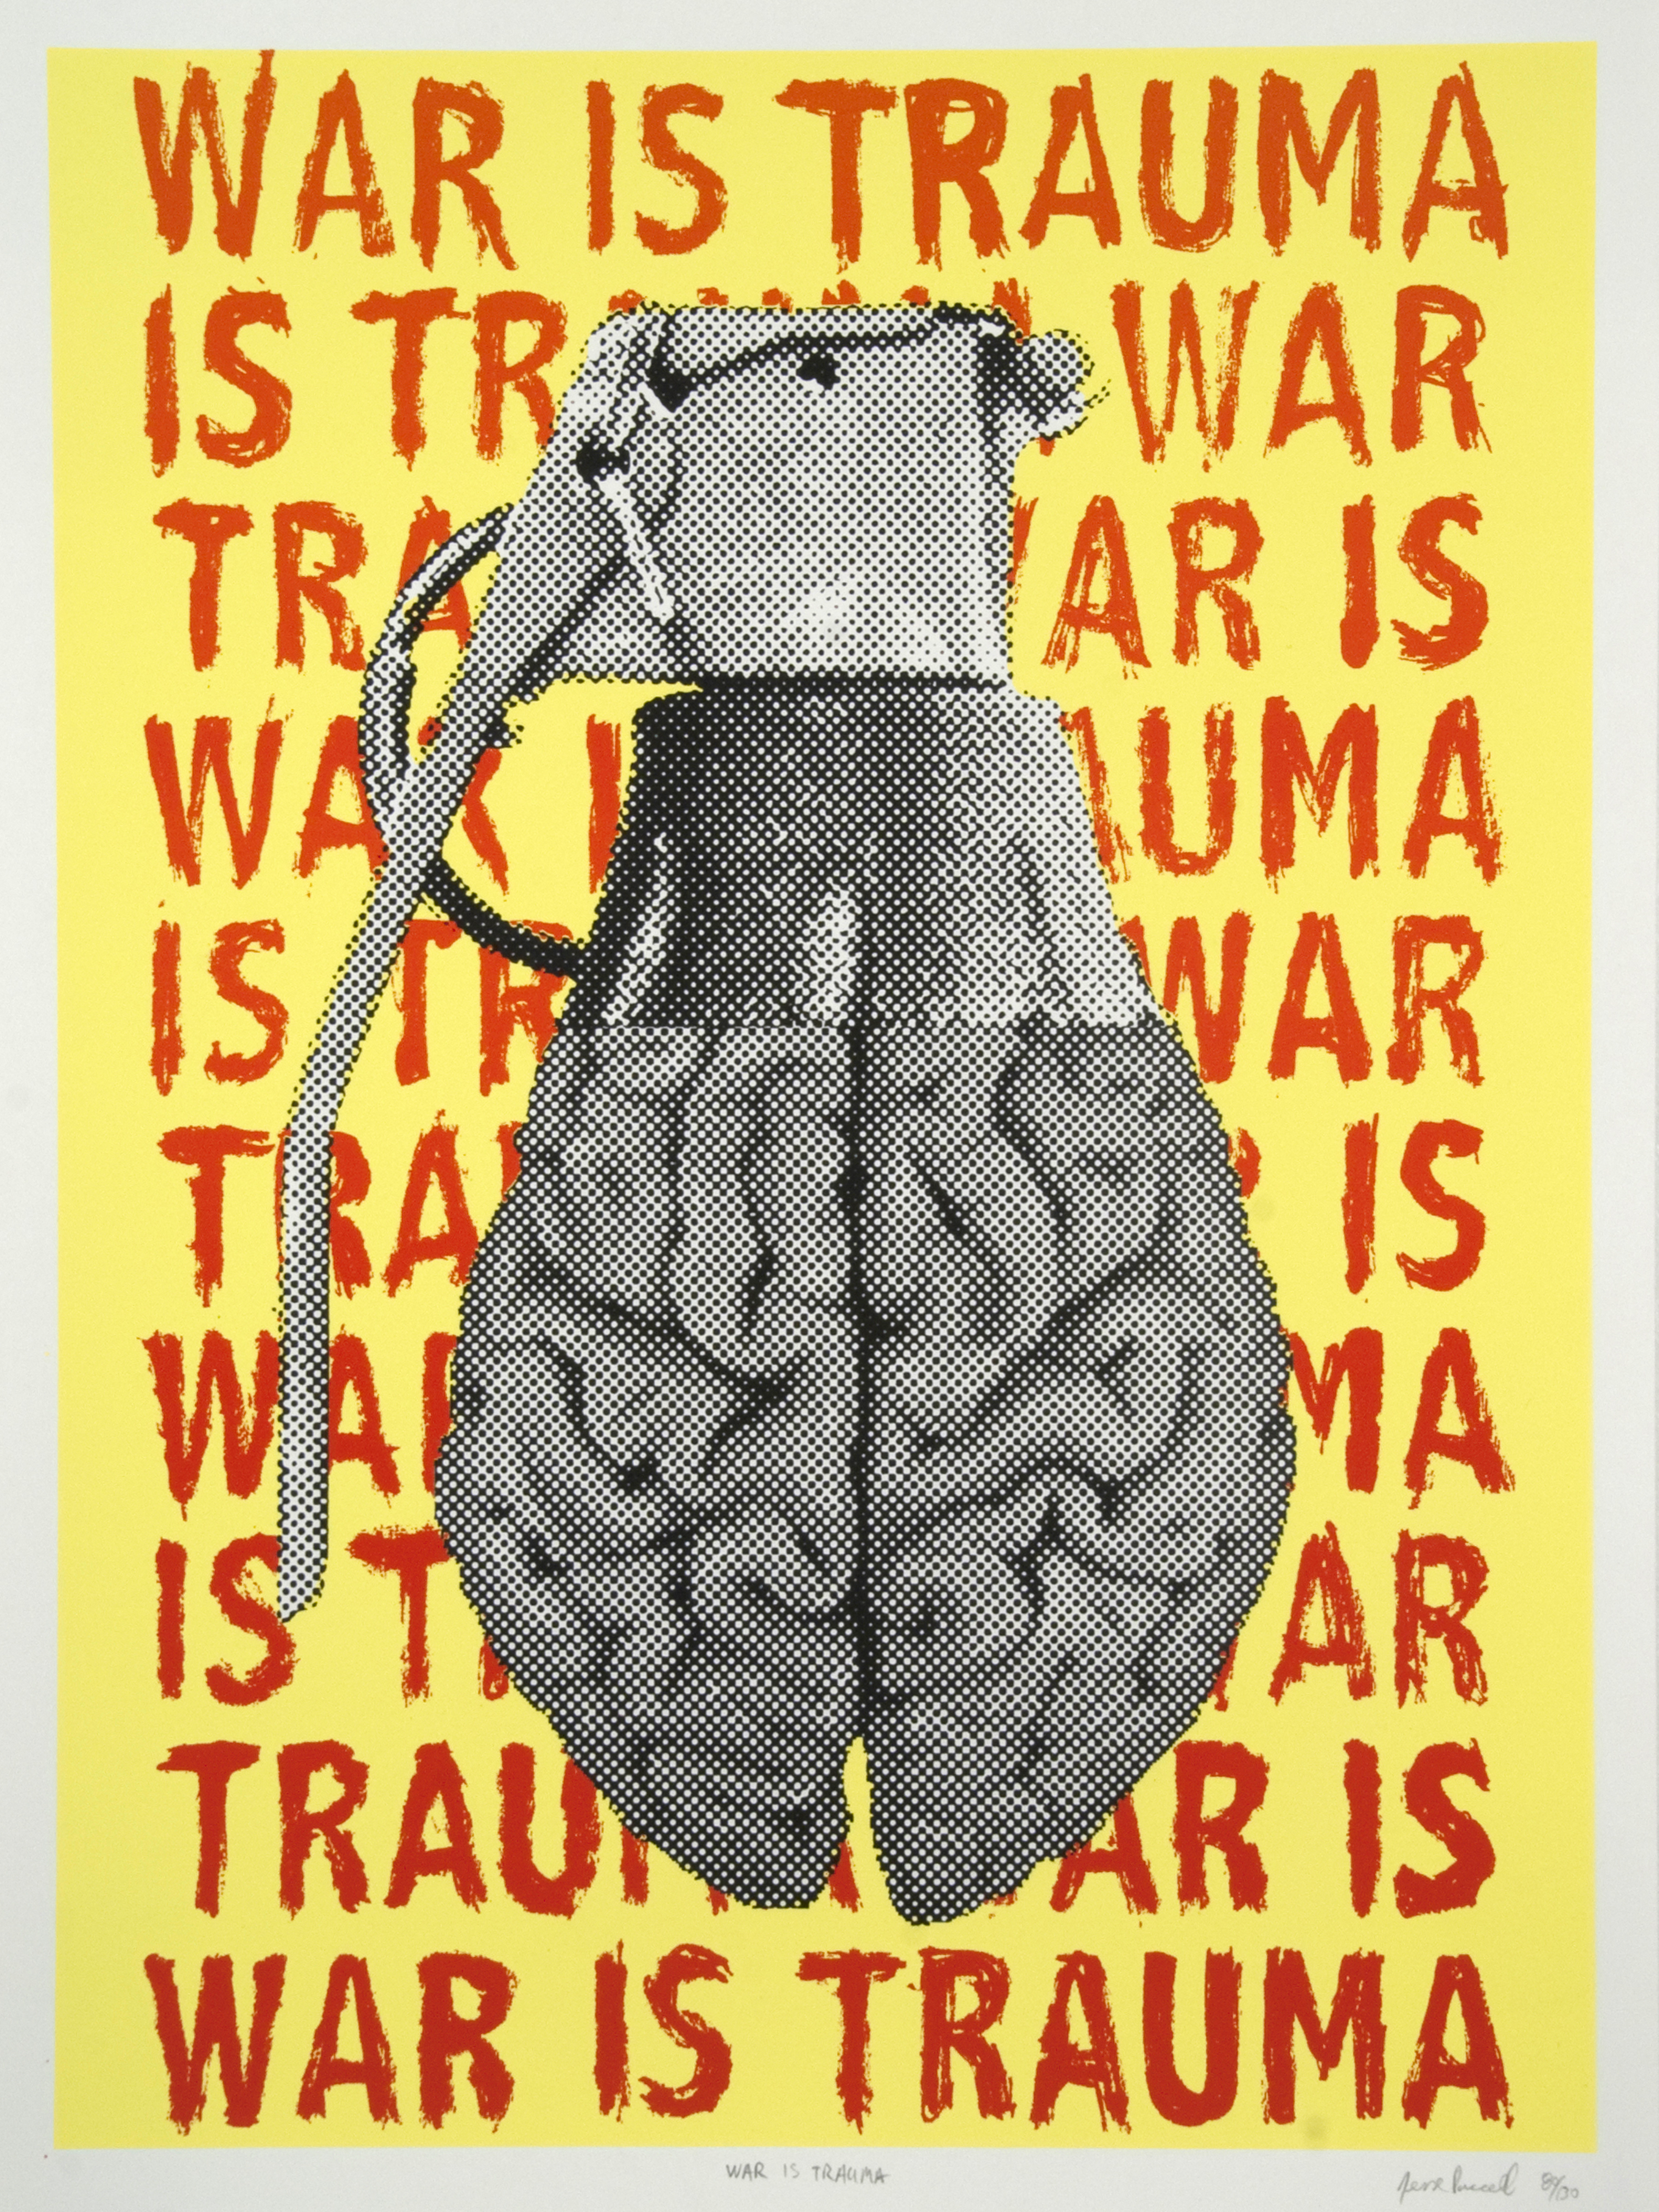 https://www.ivaw.org/sites/default/files/war_is_trauma_015.JPG